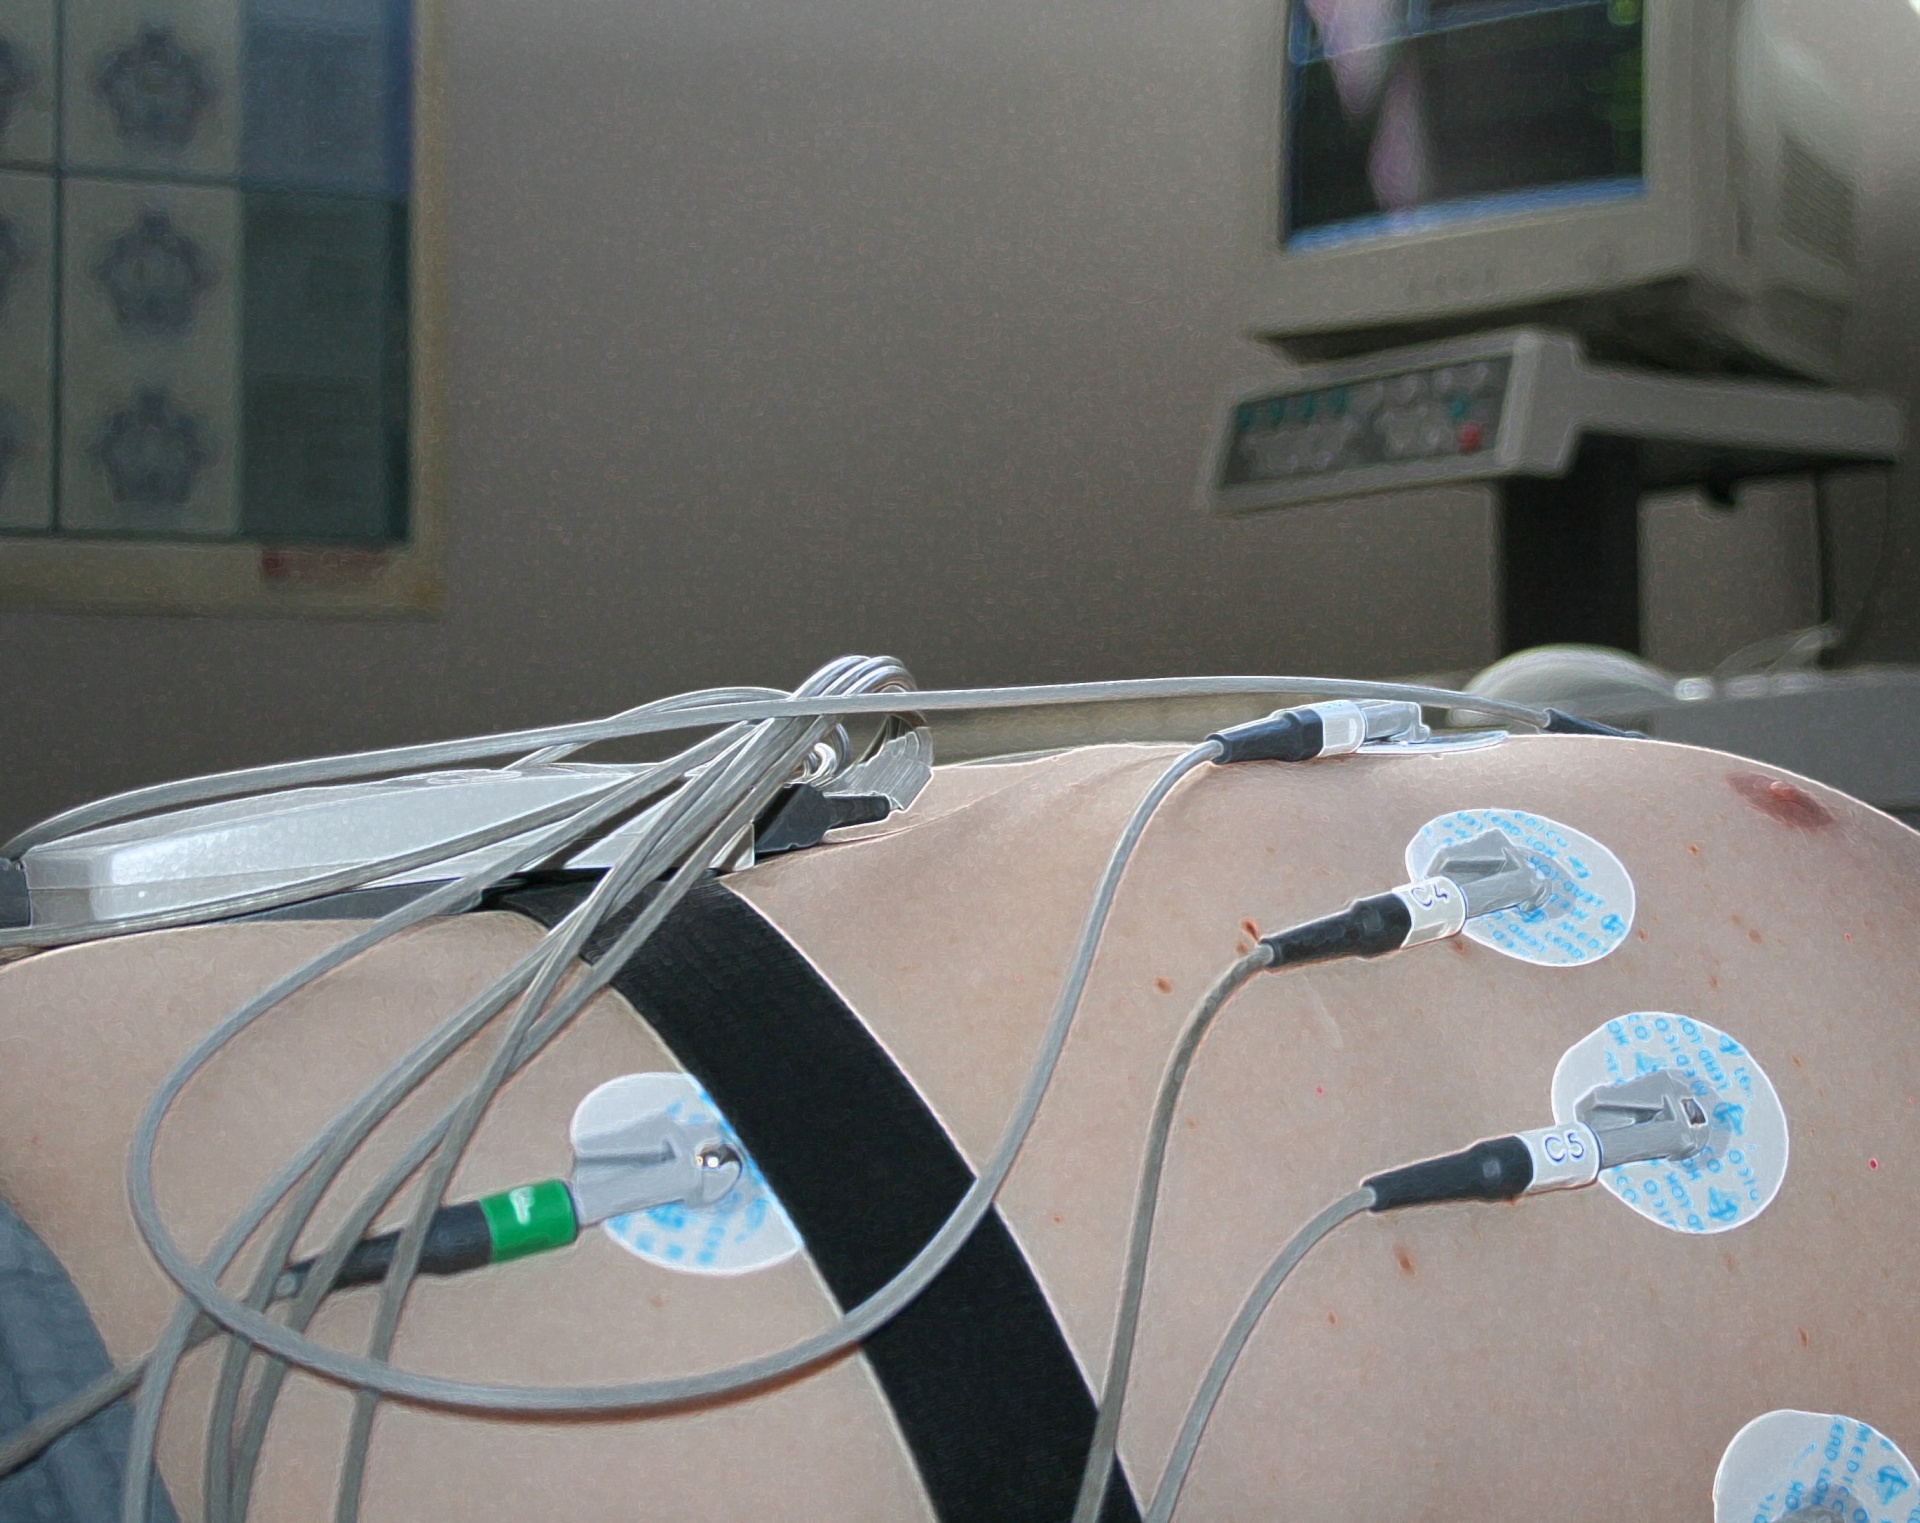 Electrodos de ECG conectados a torso